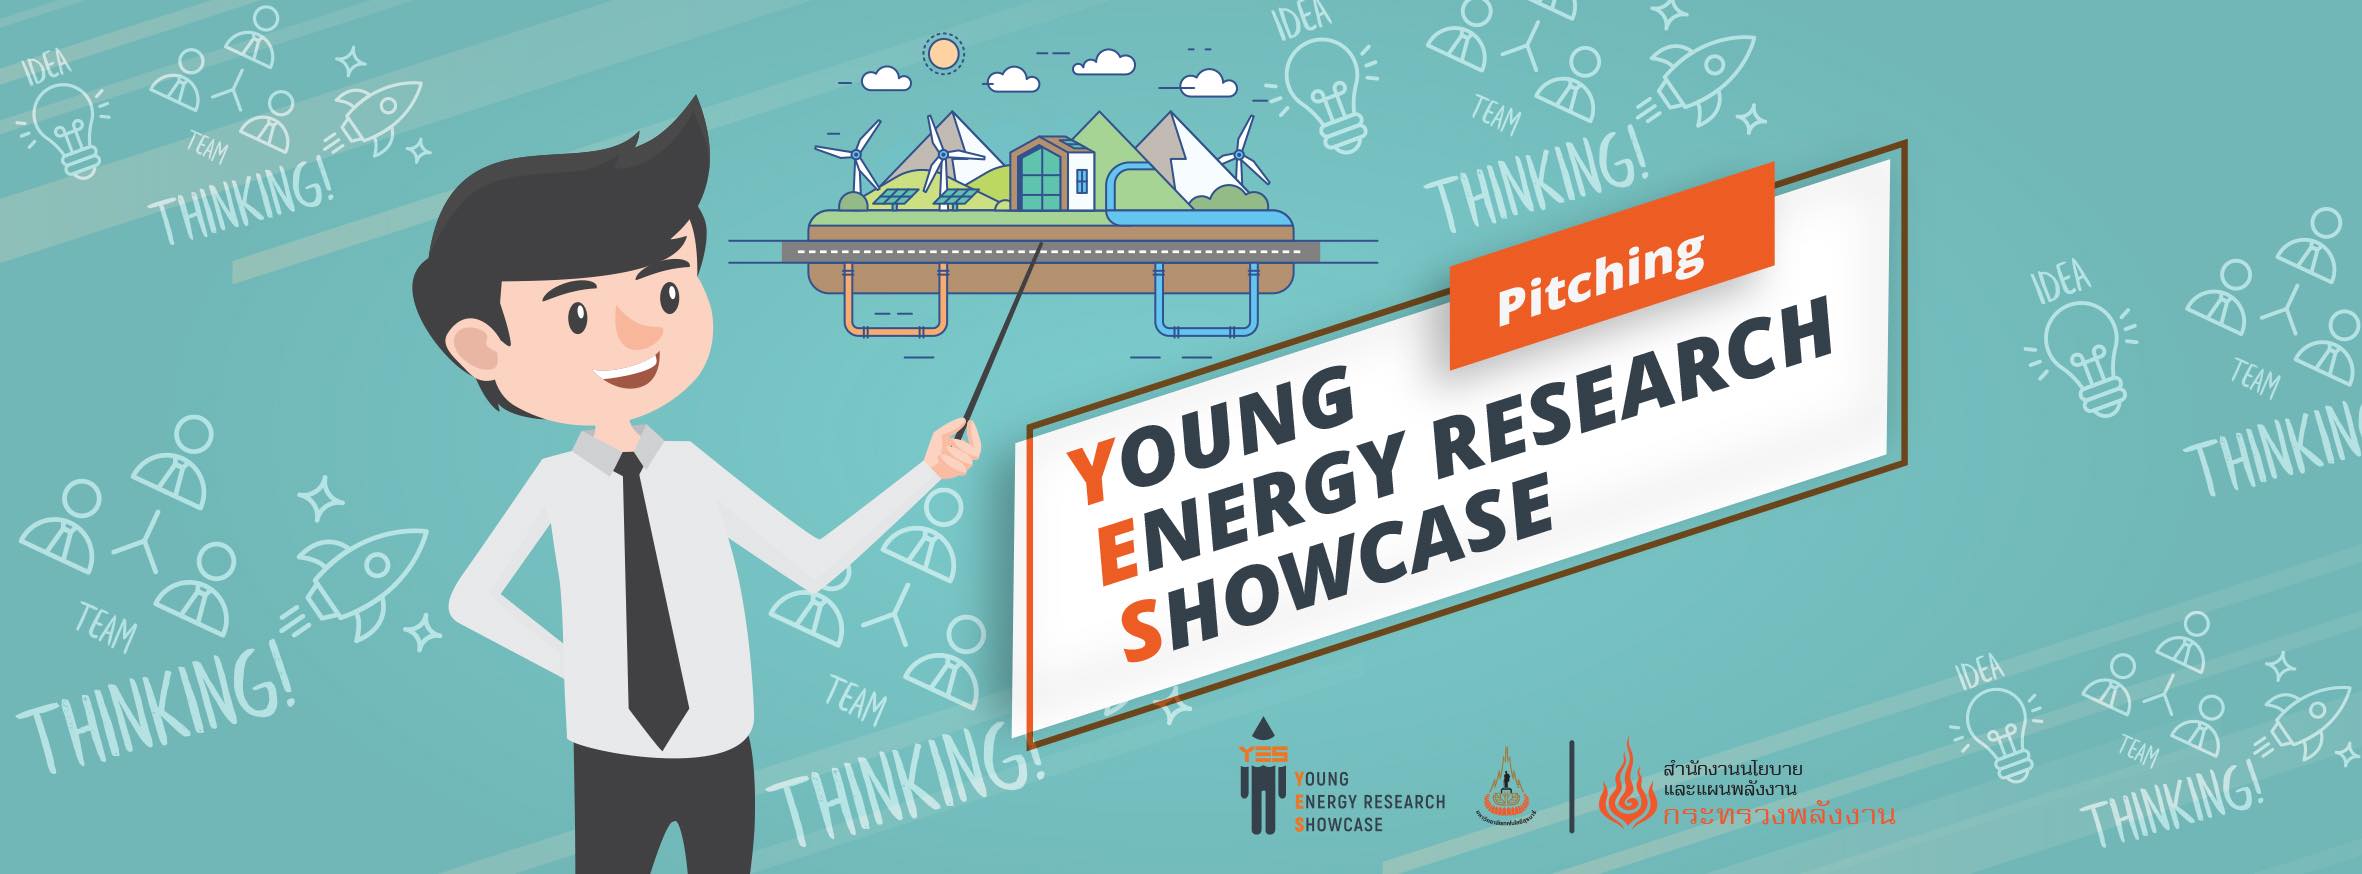 Young Energy research Showcase การประกวดโครงร่างวิจัยพลังงาน